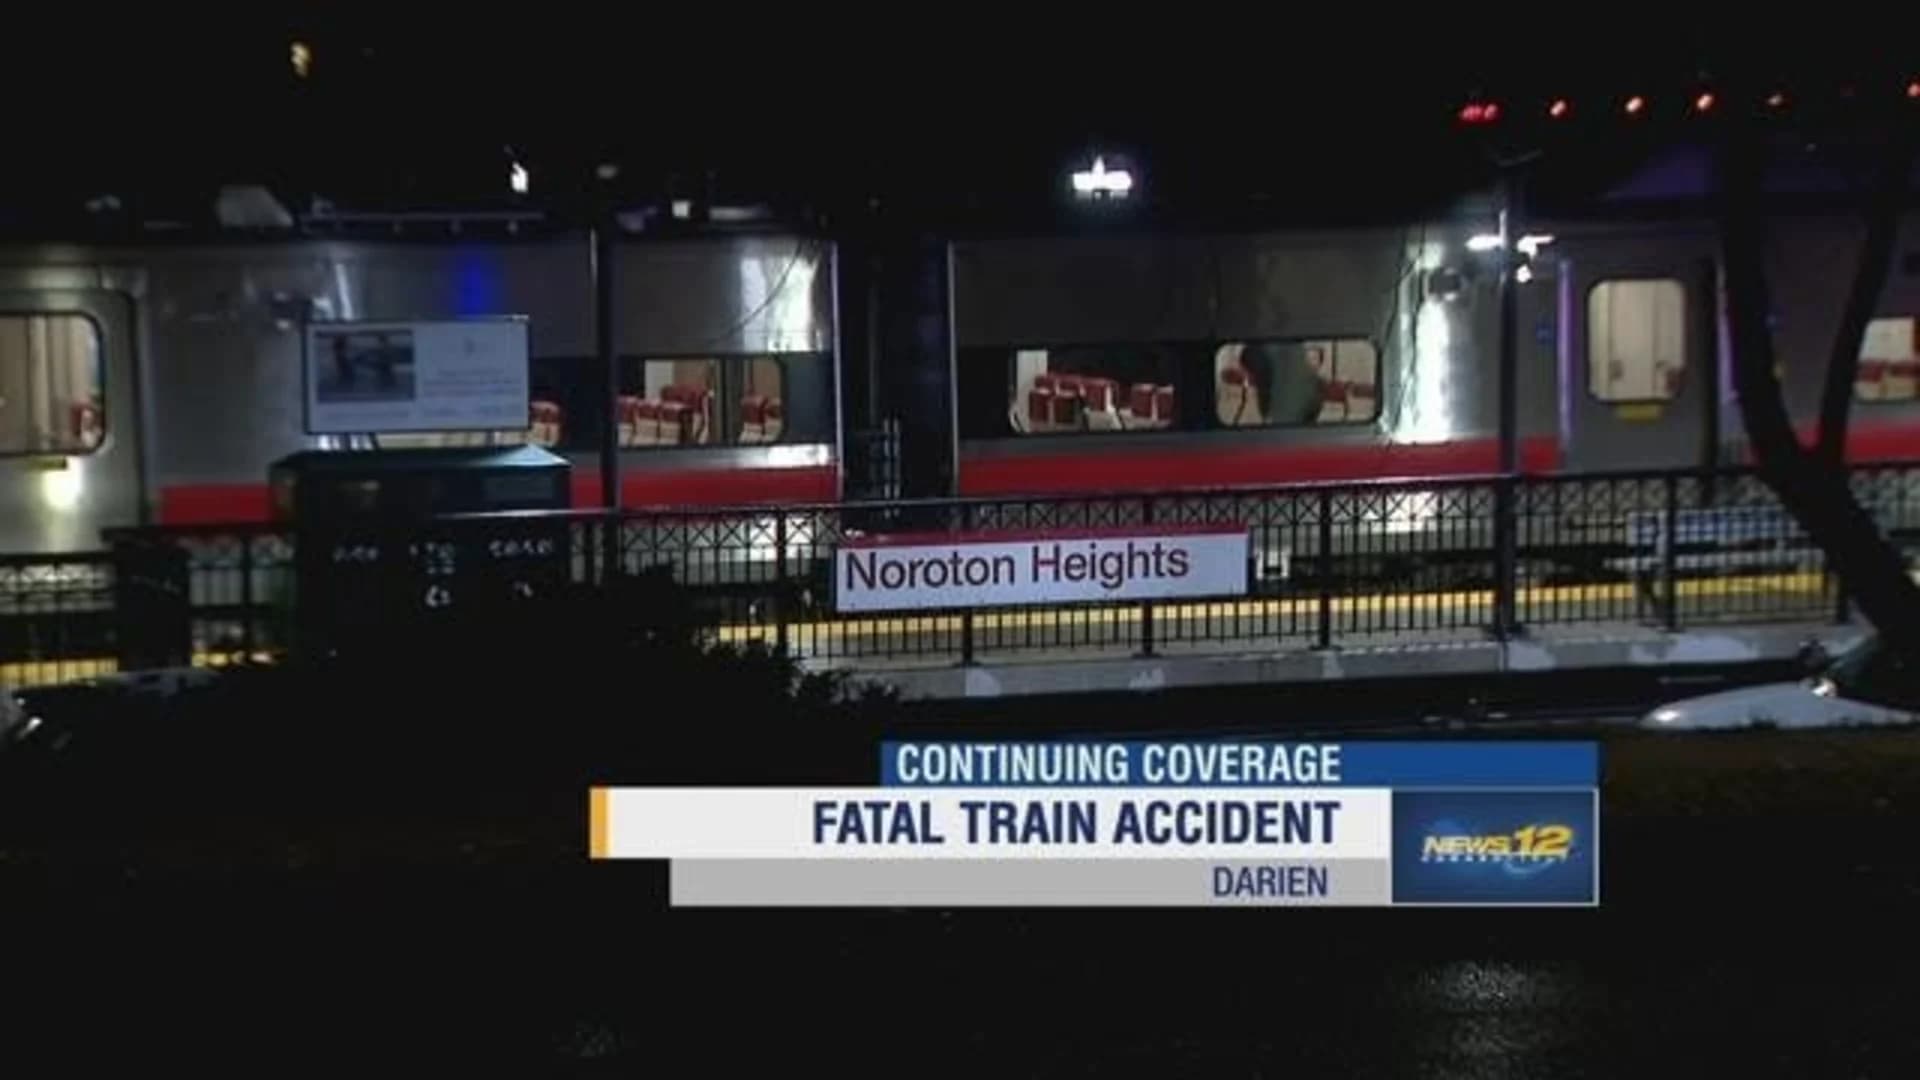 MTA: Man fatally struck by train near Noroton Heights station in Darien